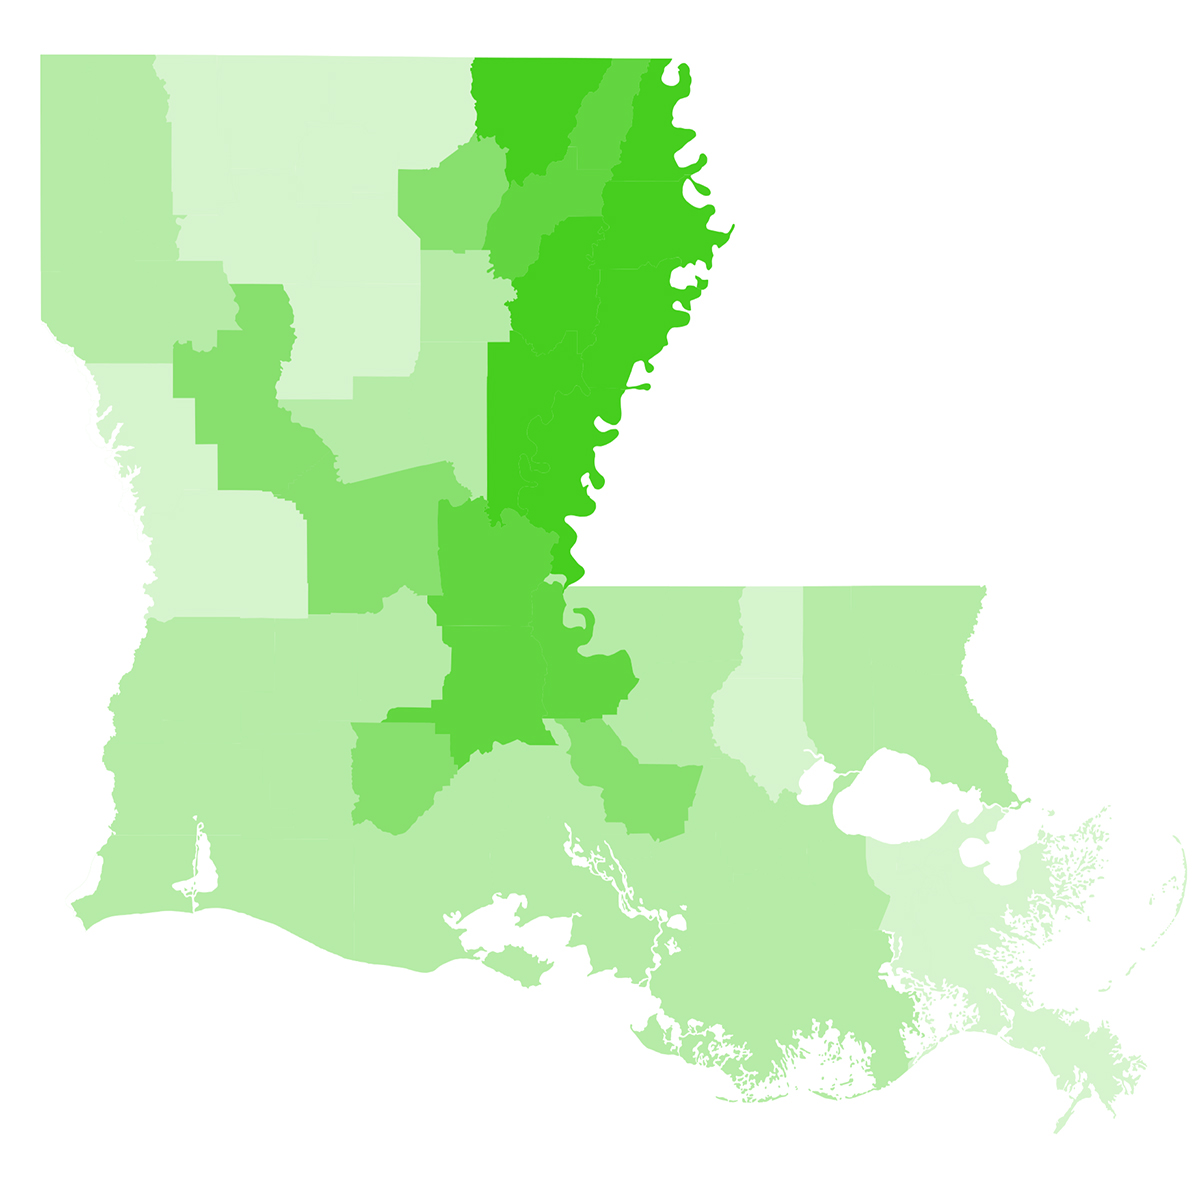 Density map of soybean farming in Louisiana parishes